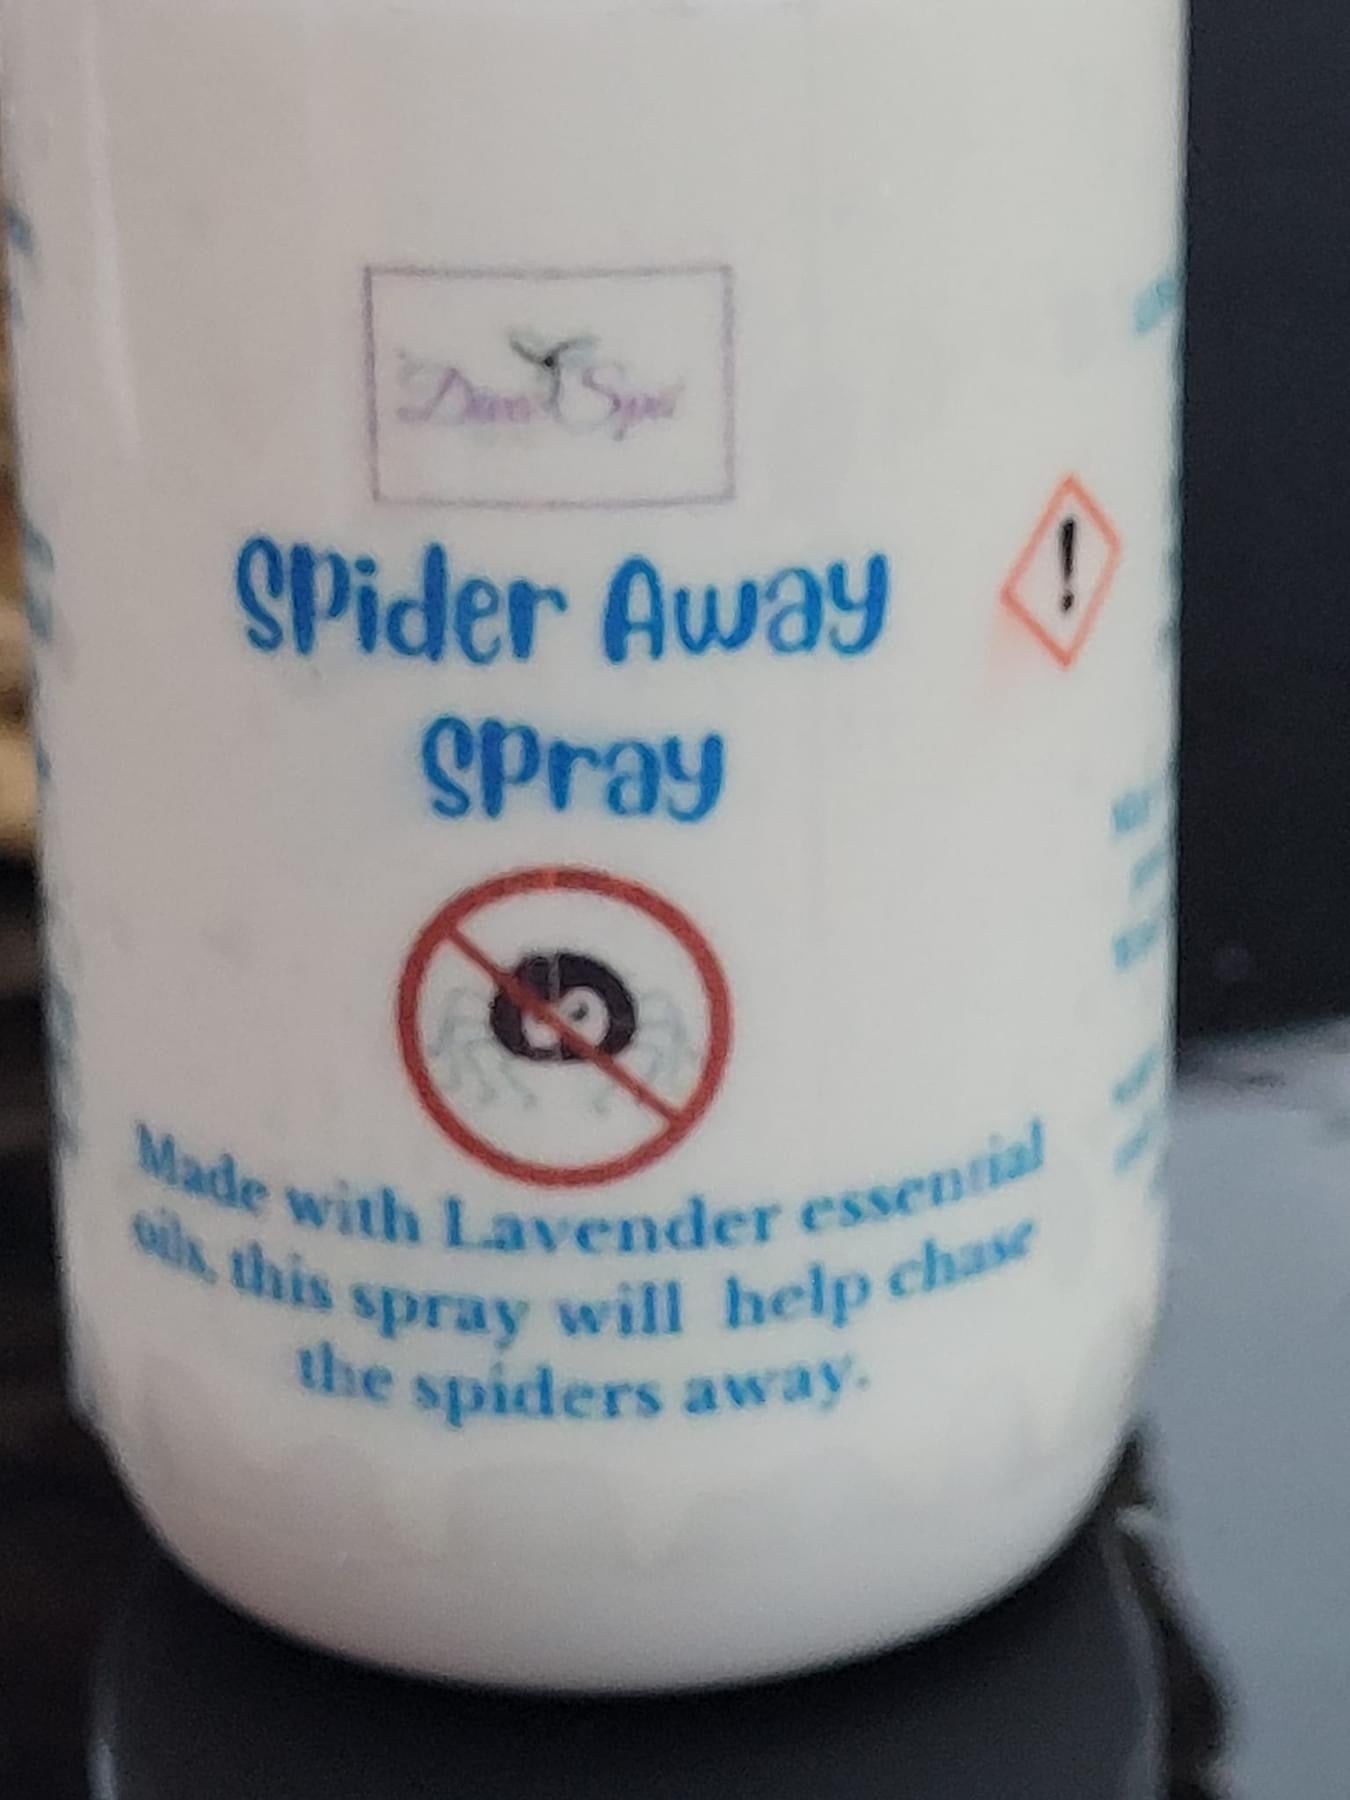 Spider Away Spray